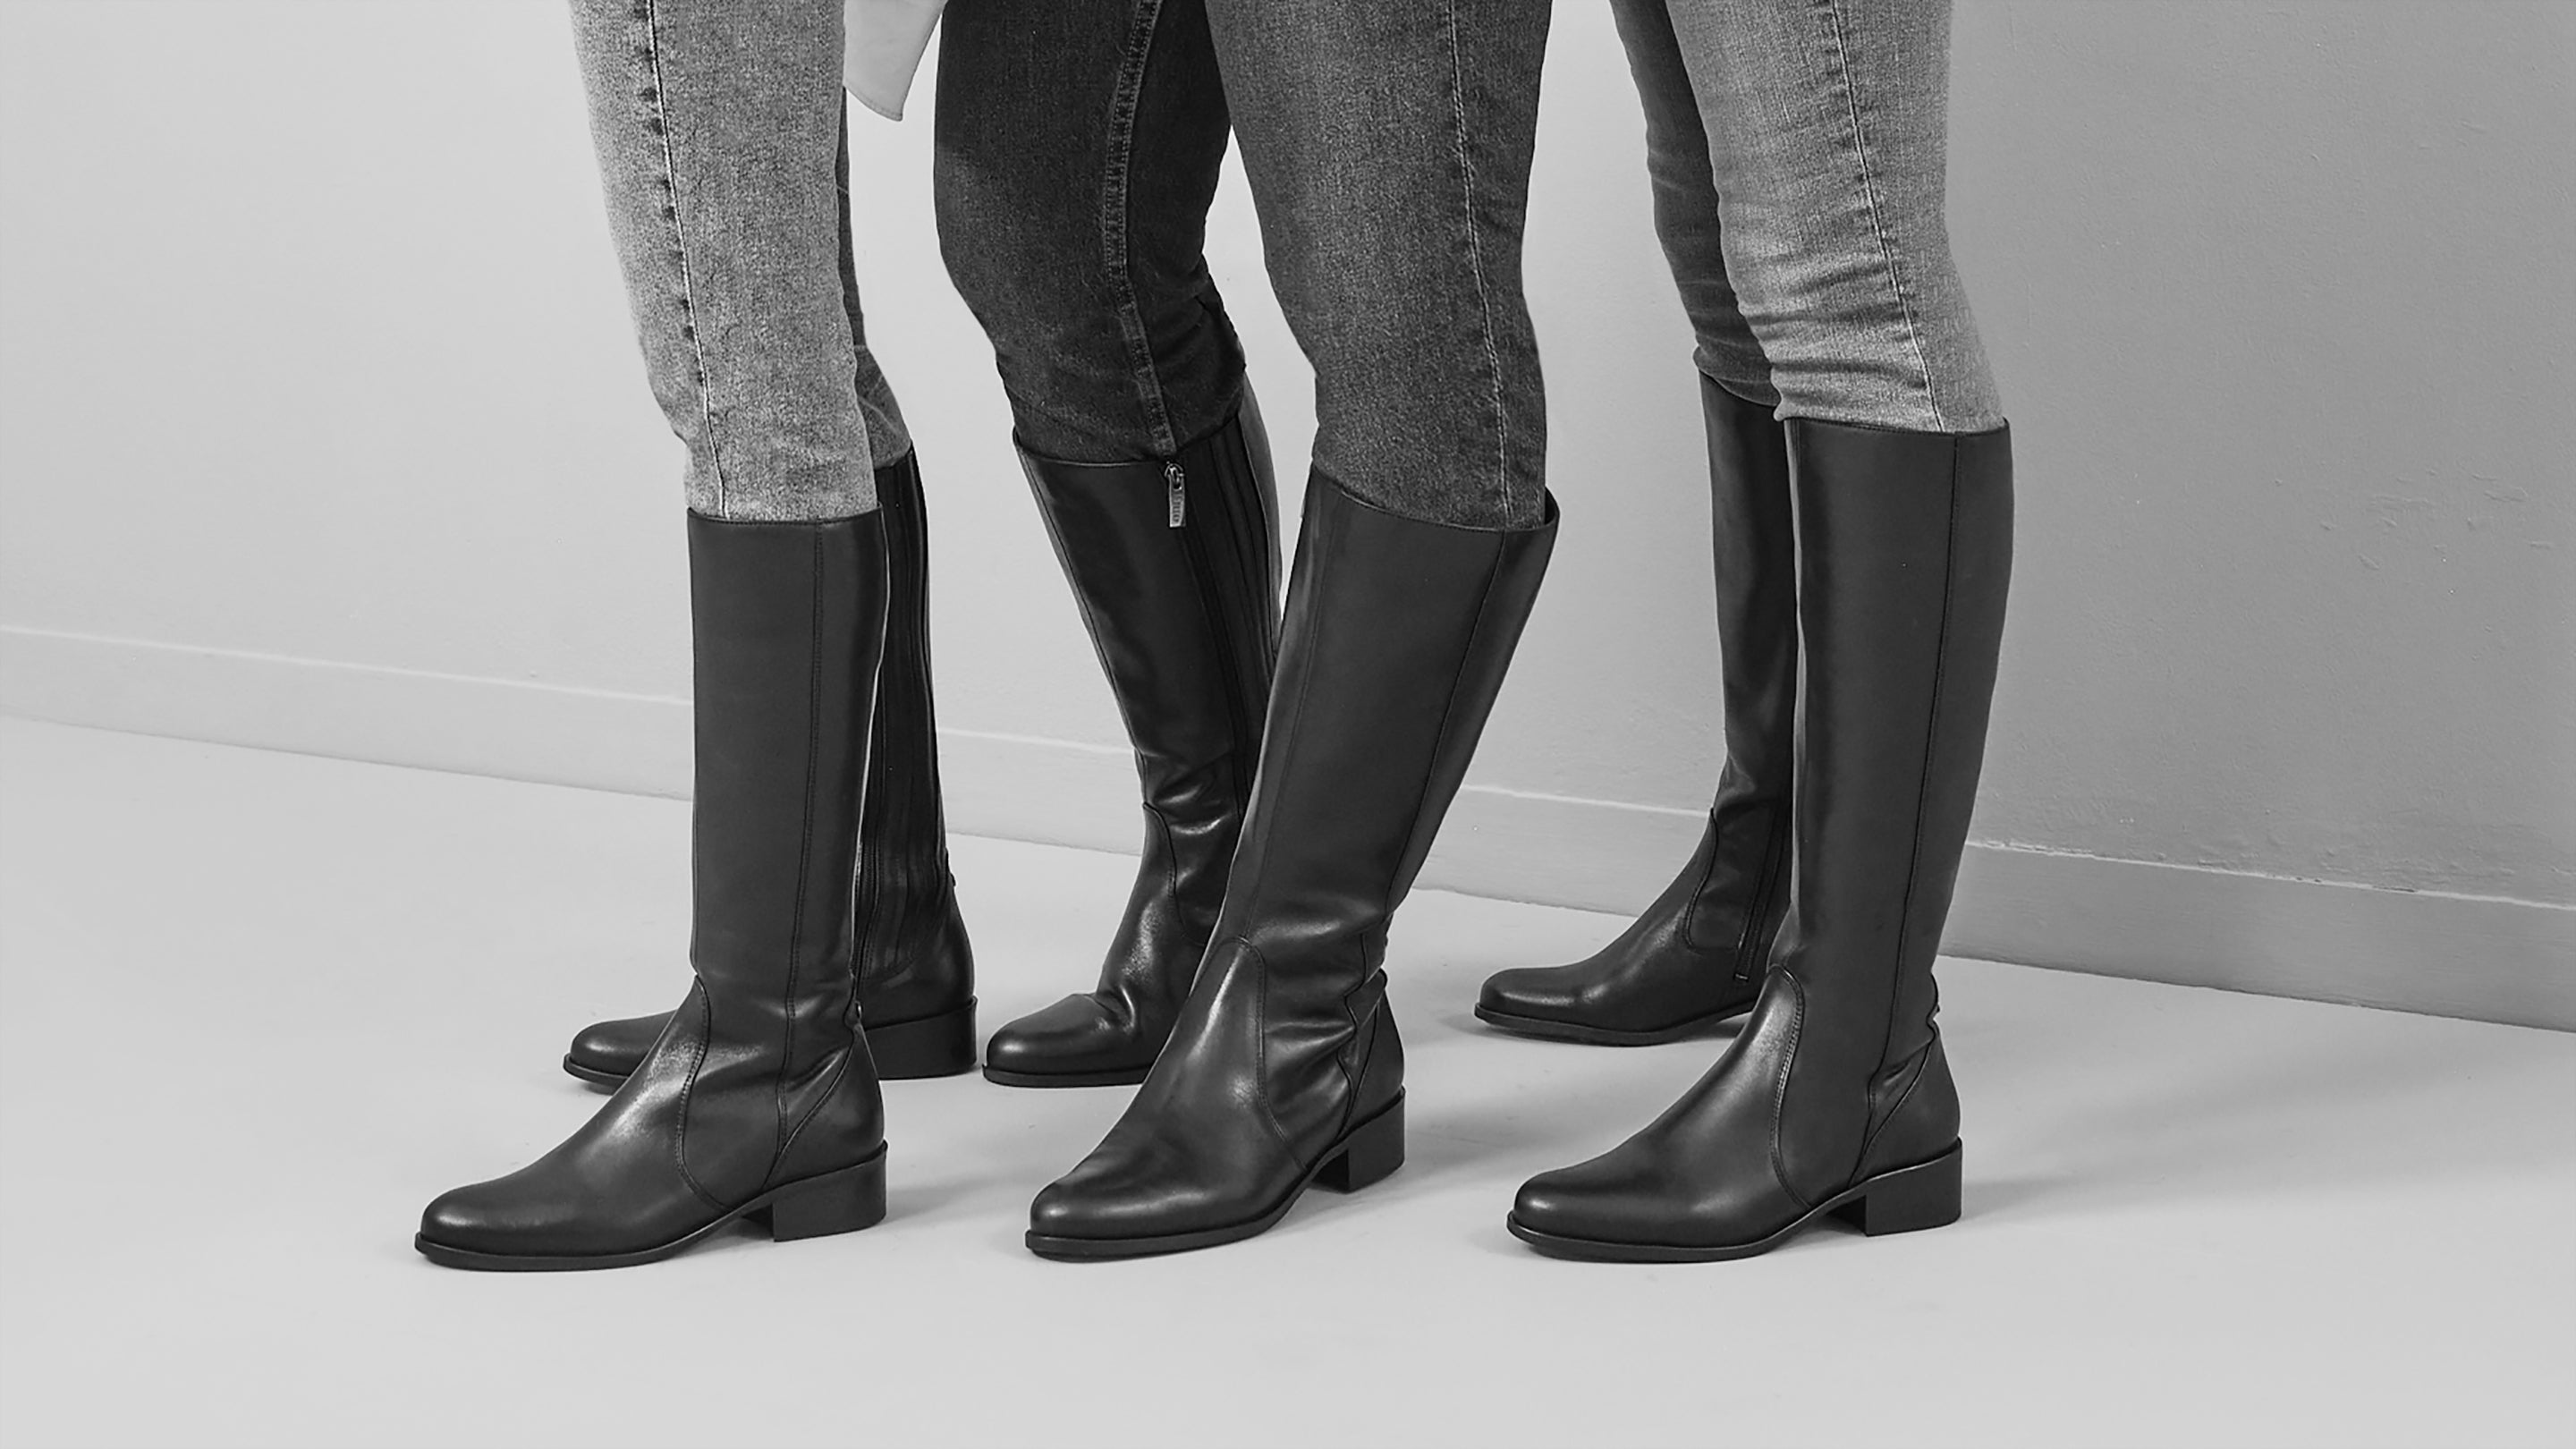 three women wearing black leather knee high flat boots